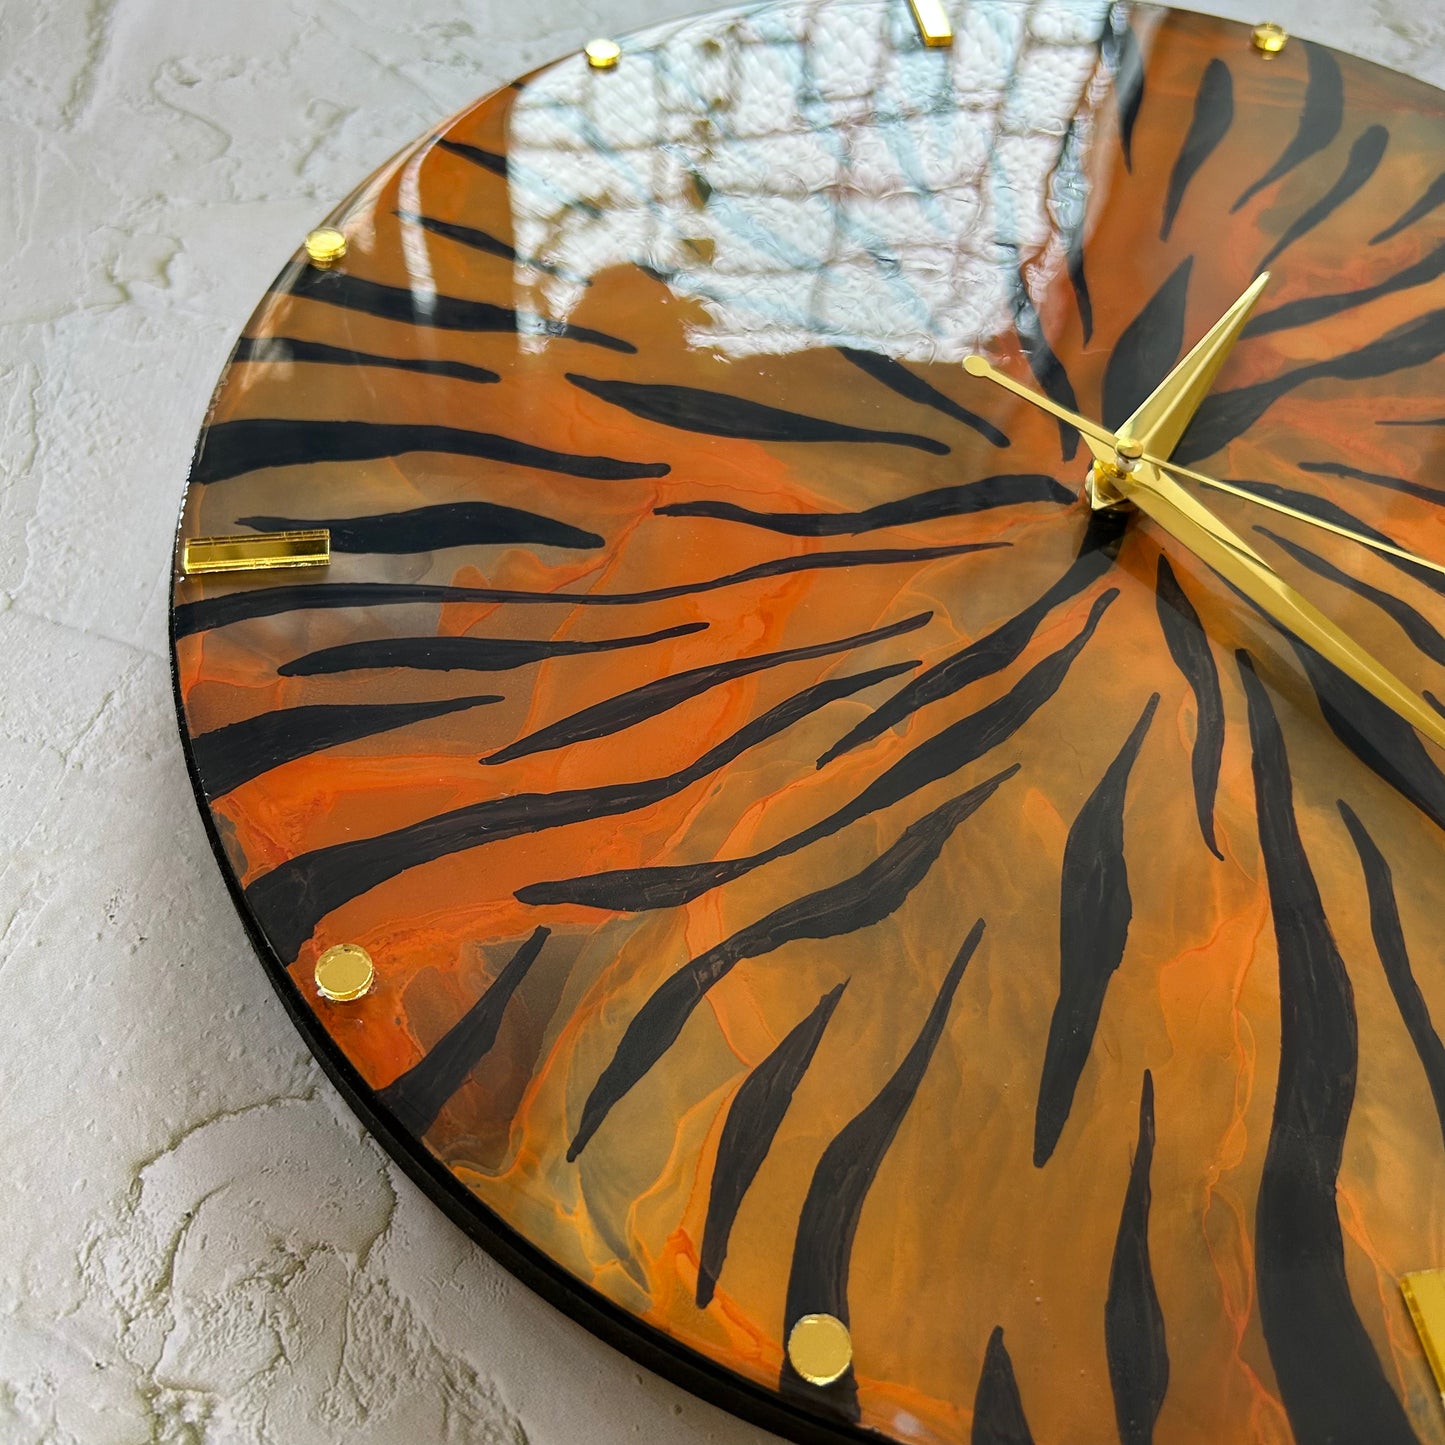 Triumphant Times - Tiger theme clock